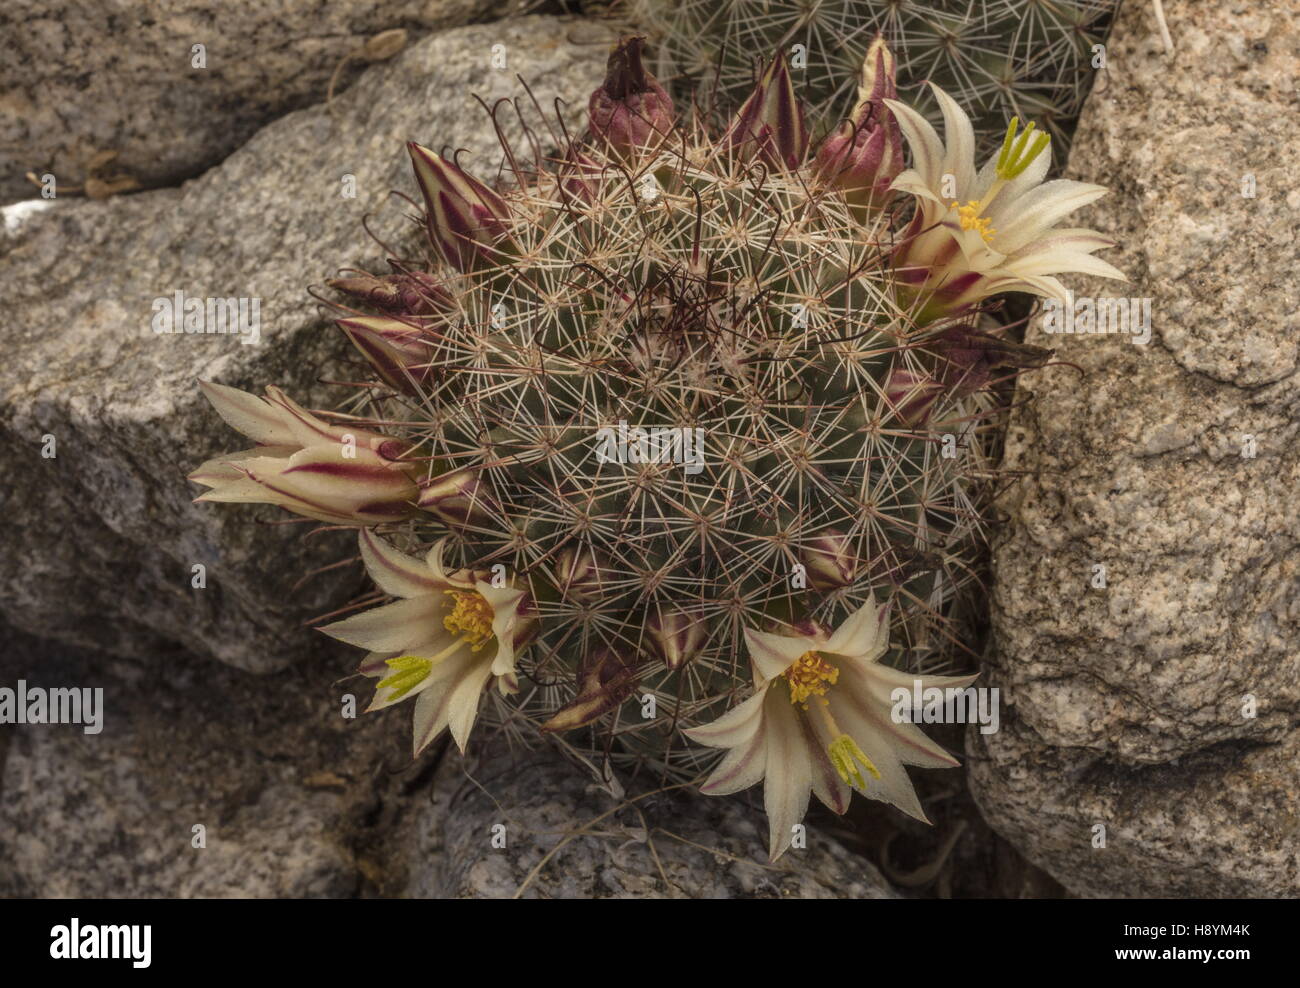 Strawberry cactus or California fishhook cactus, Mammillaria dioica, in flower; Sonoran Desert, California. Stock Photo